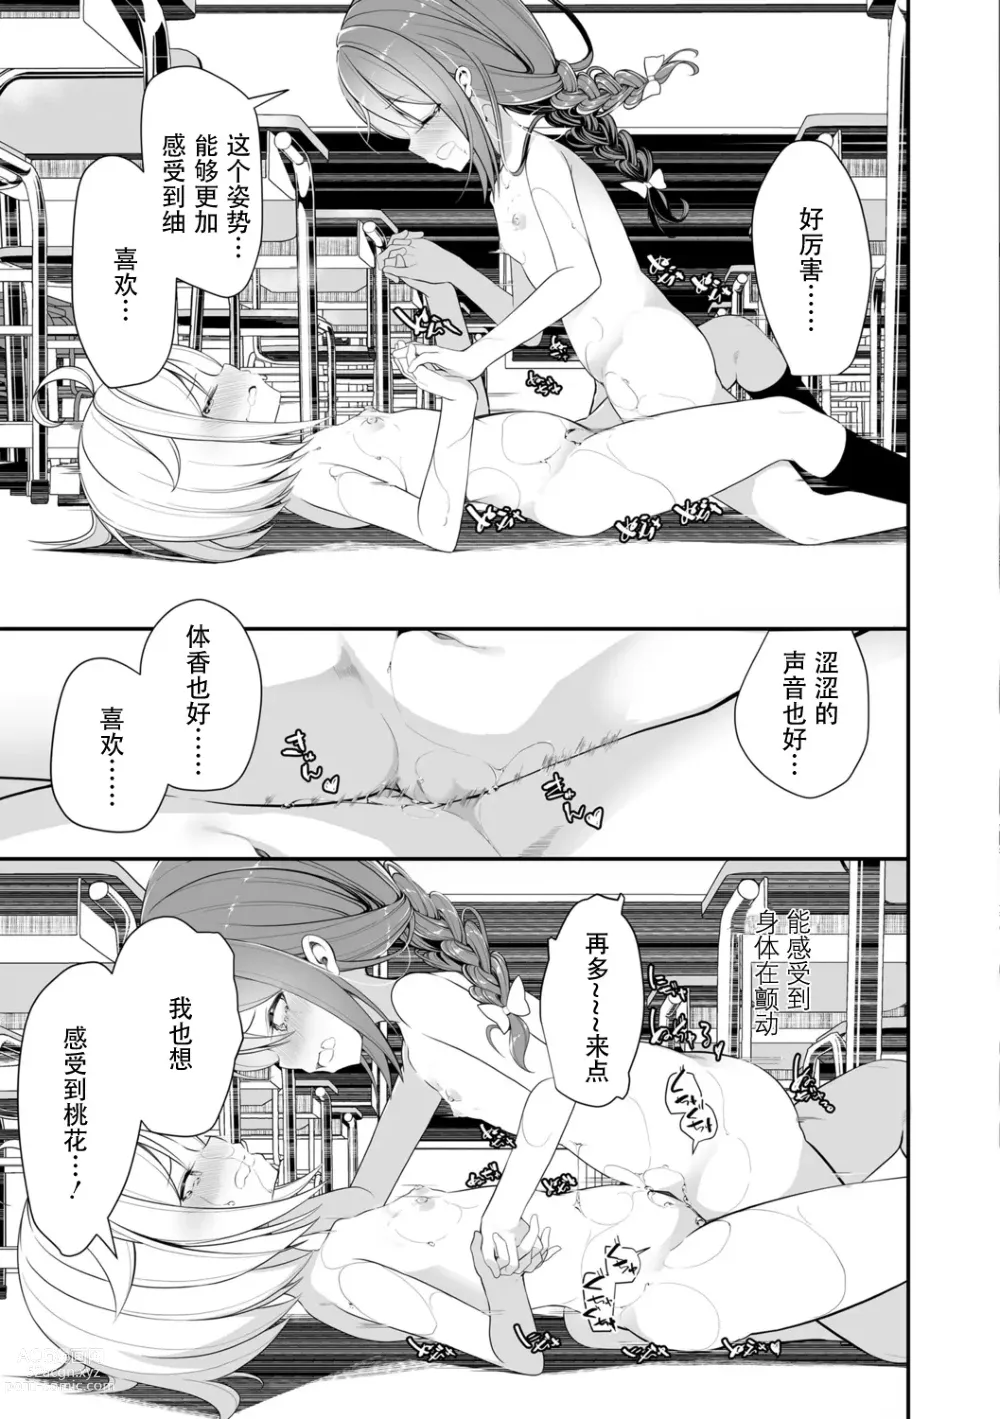 Page 17 of manga 越是吵架关系越好